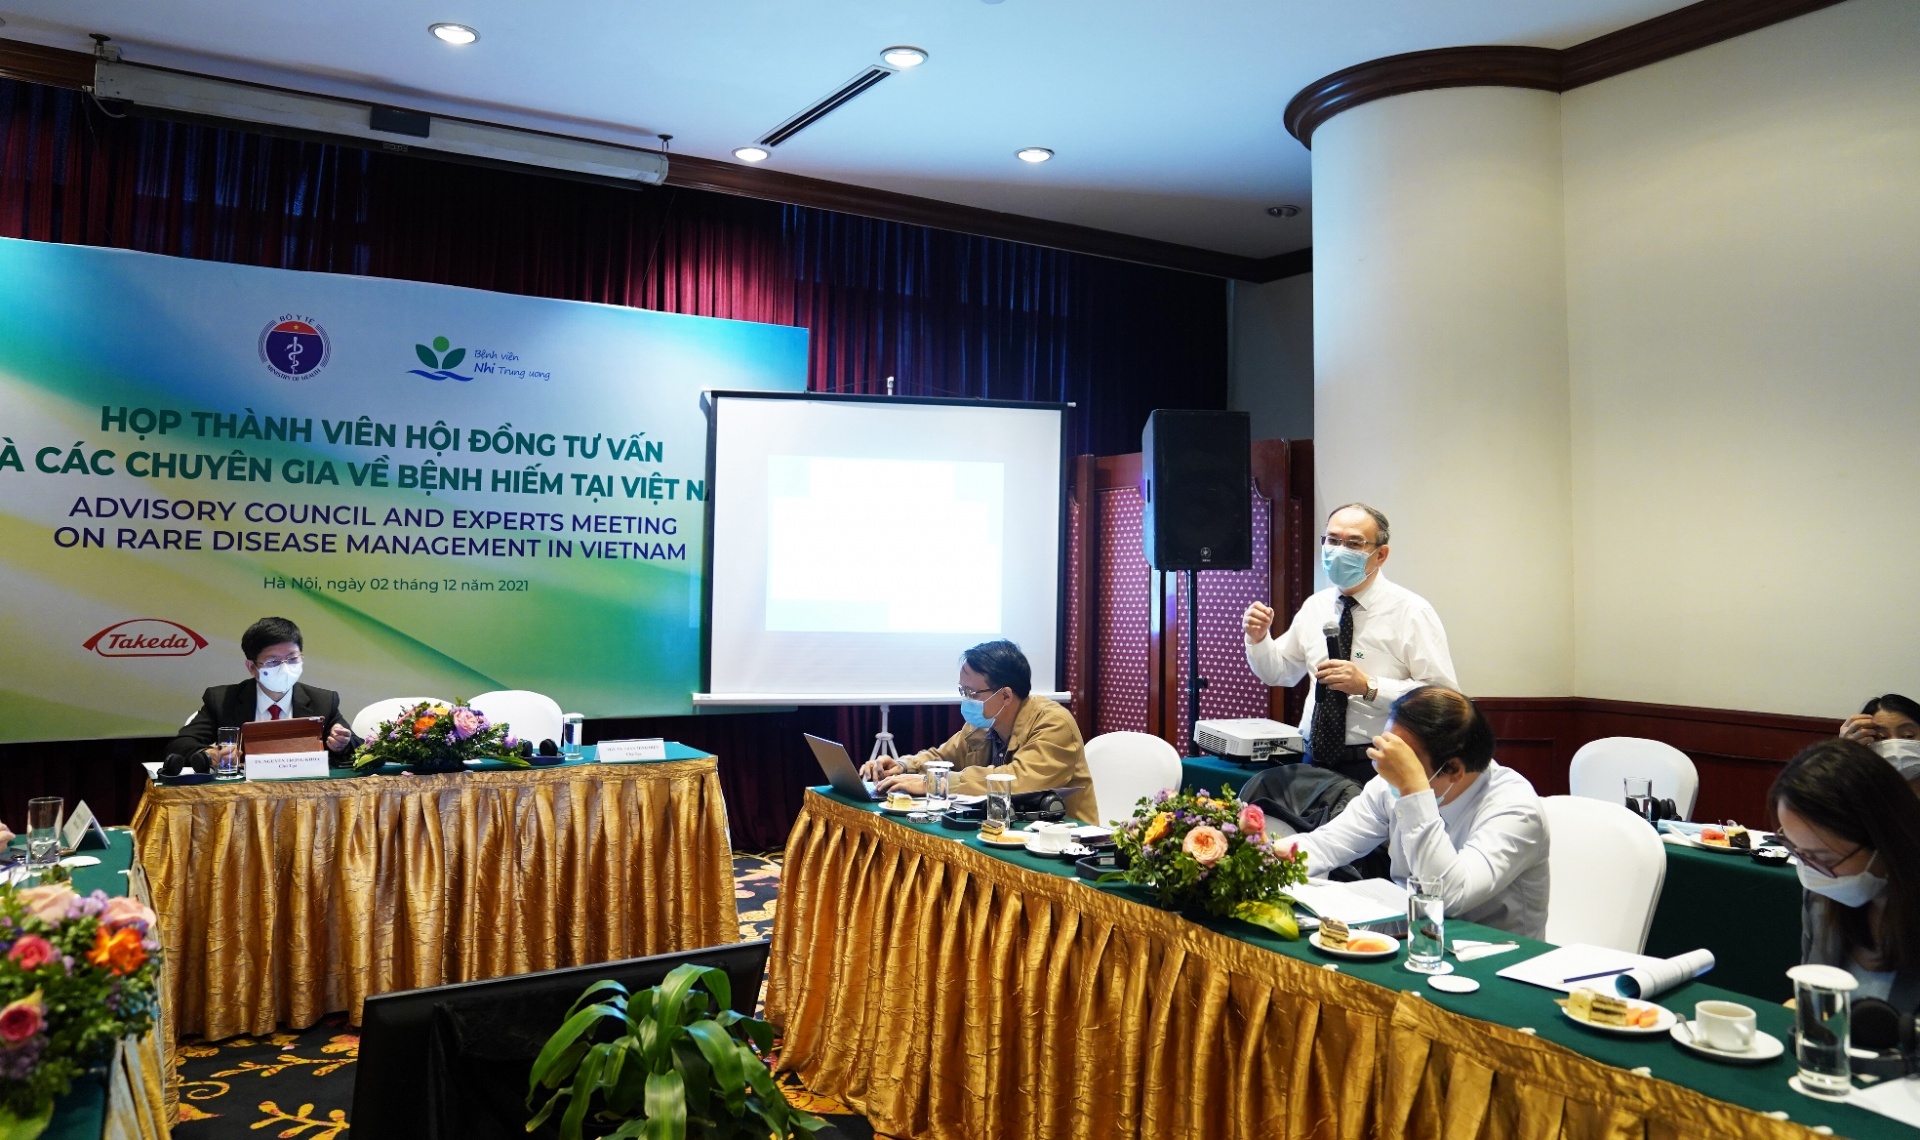 Stakeholders seek to enhance quality of rare disease treatment in Vietnam